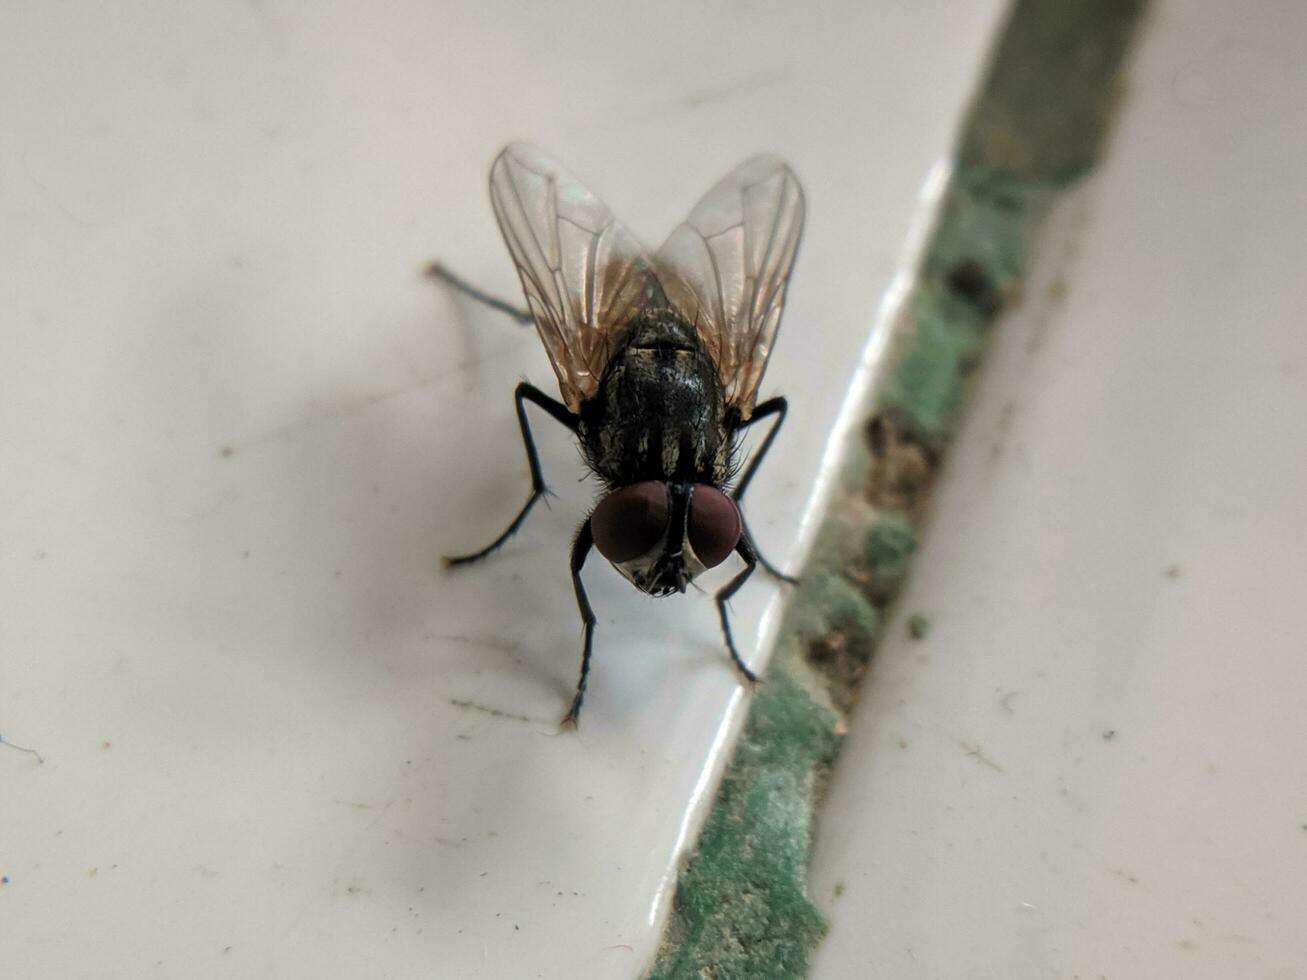 Macro shot of flies on white ceramic floor in house photo